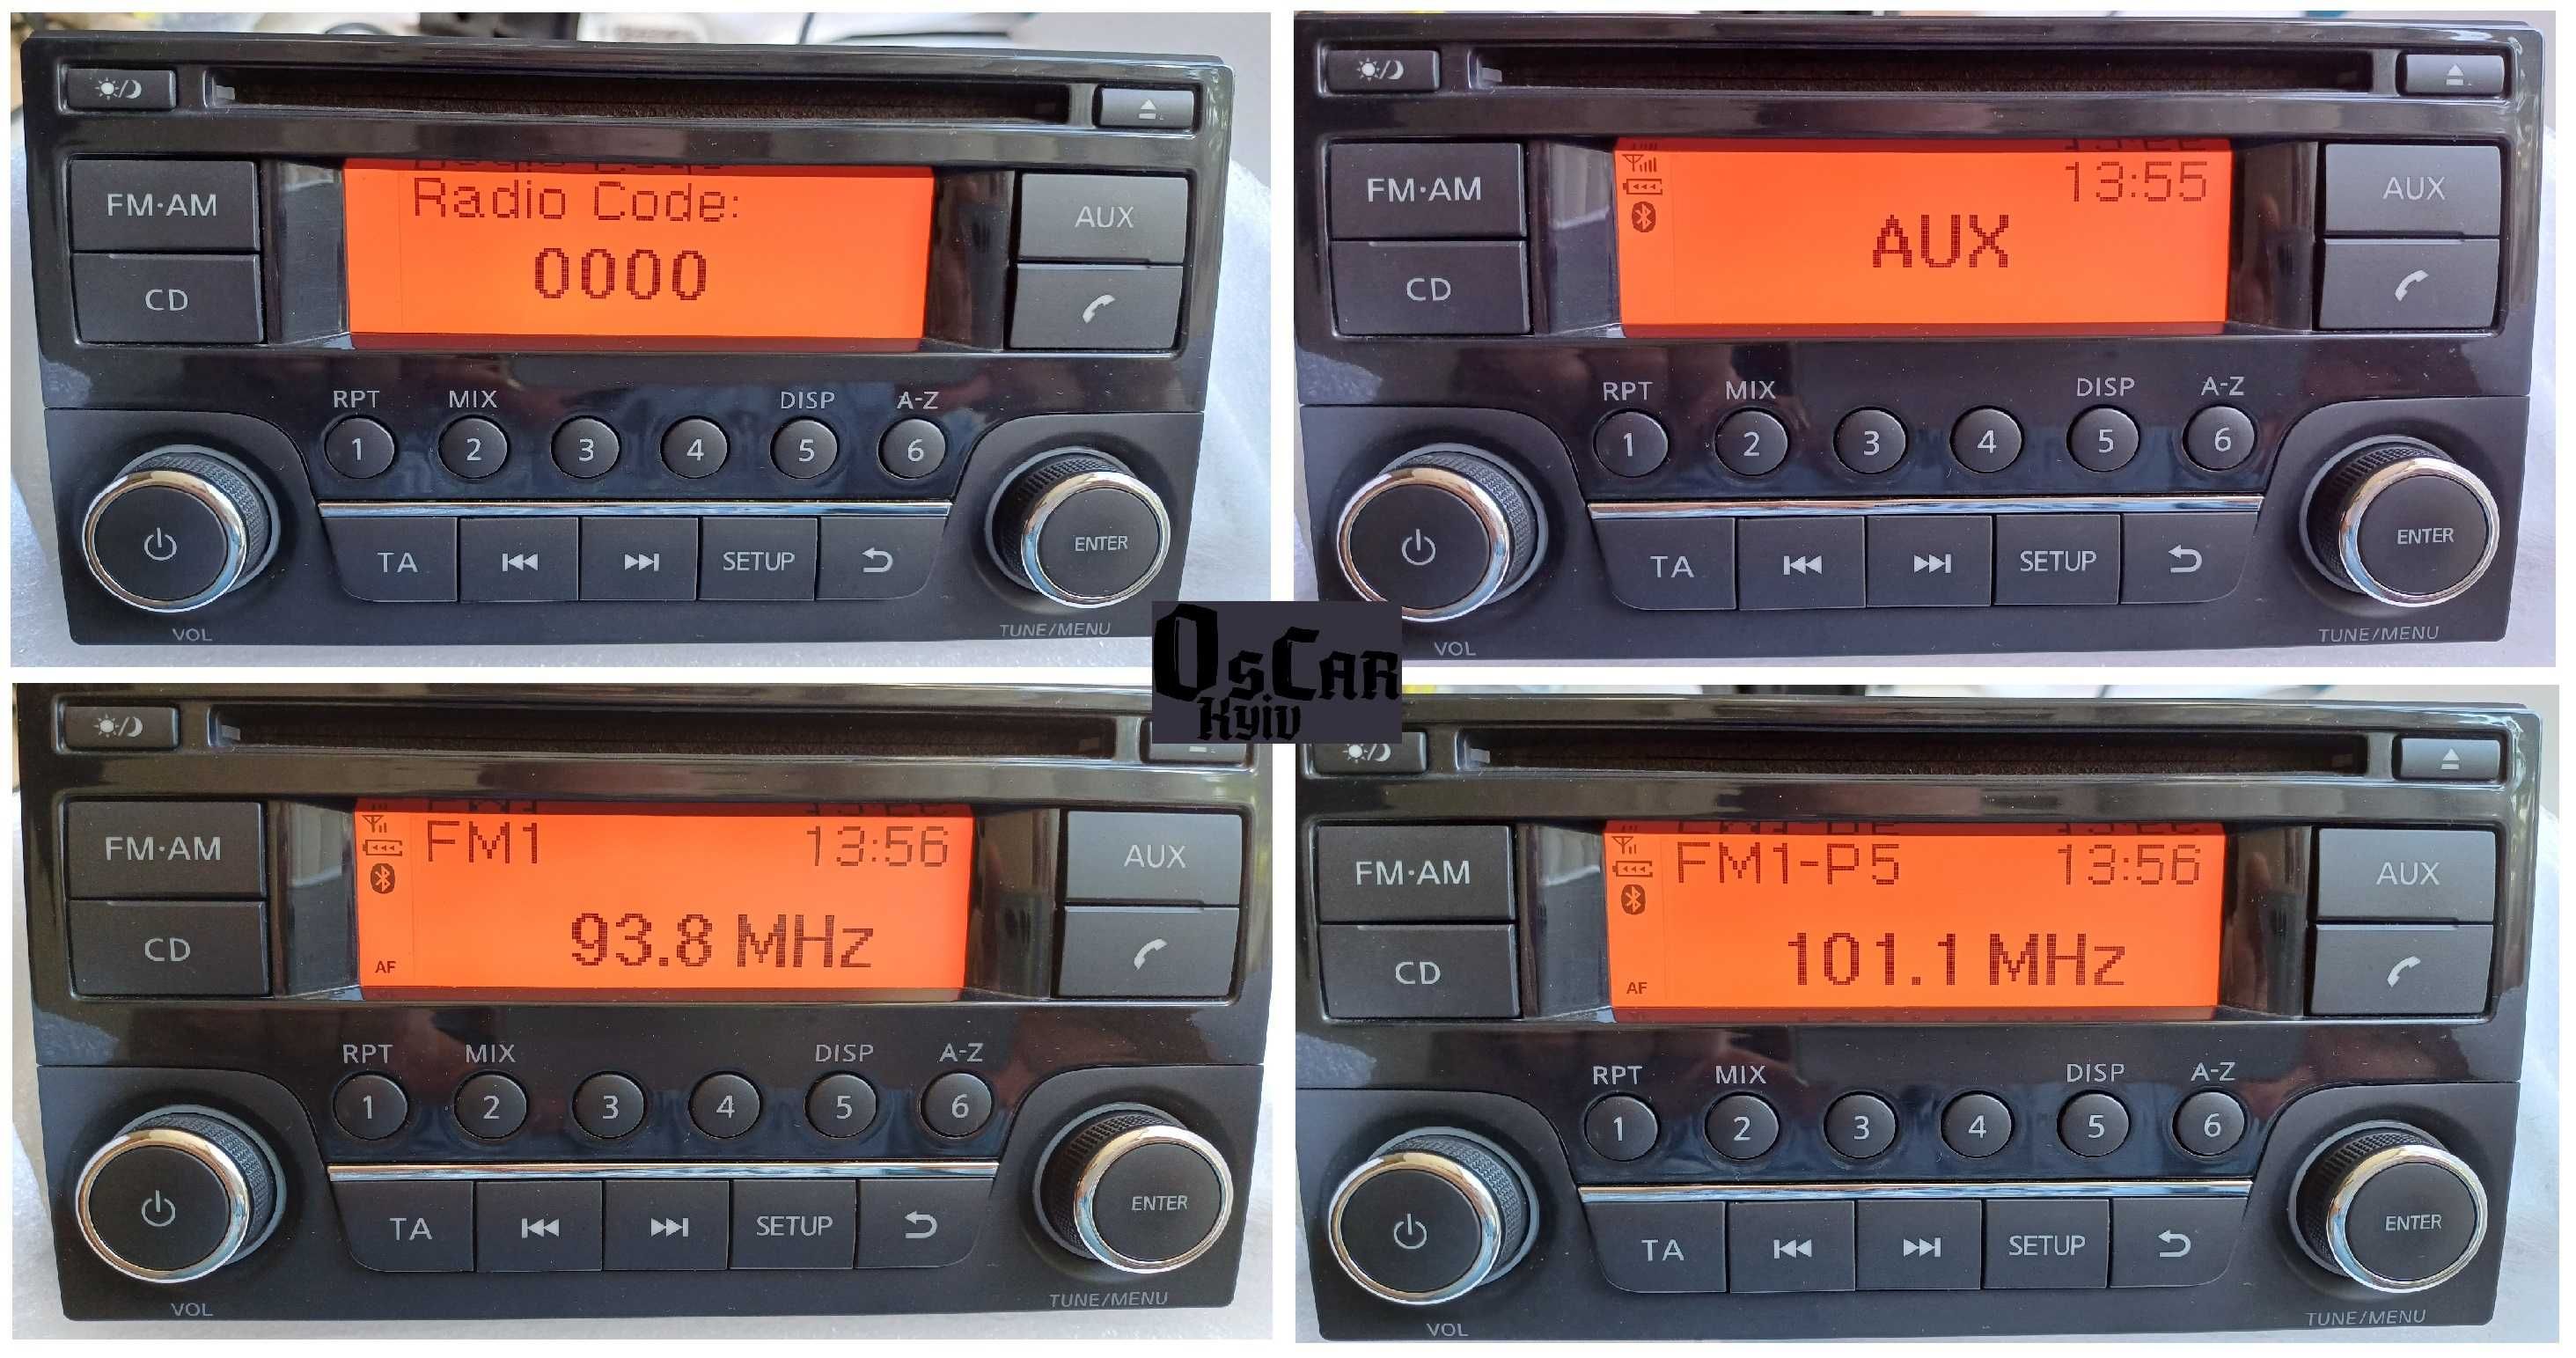 Экран реверсная версия для Магнитол Nissan daewoo AGC-0070/71 RF